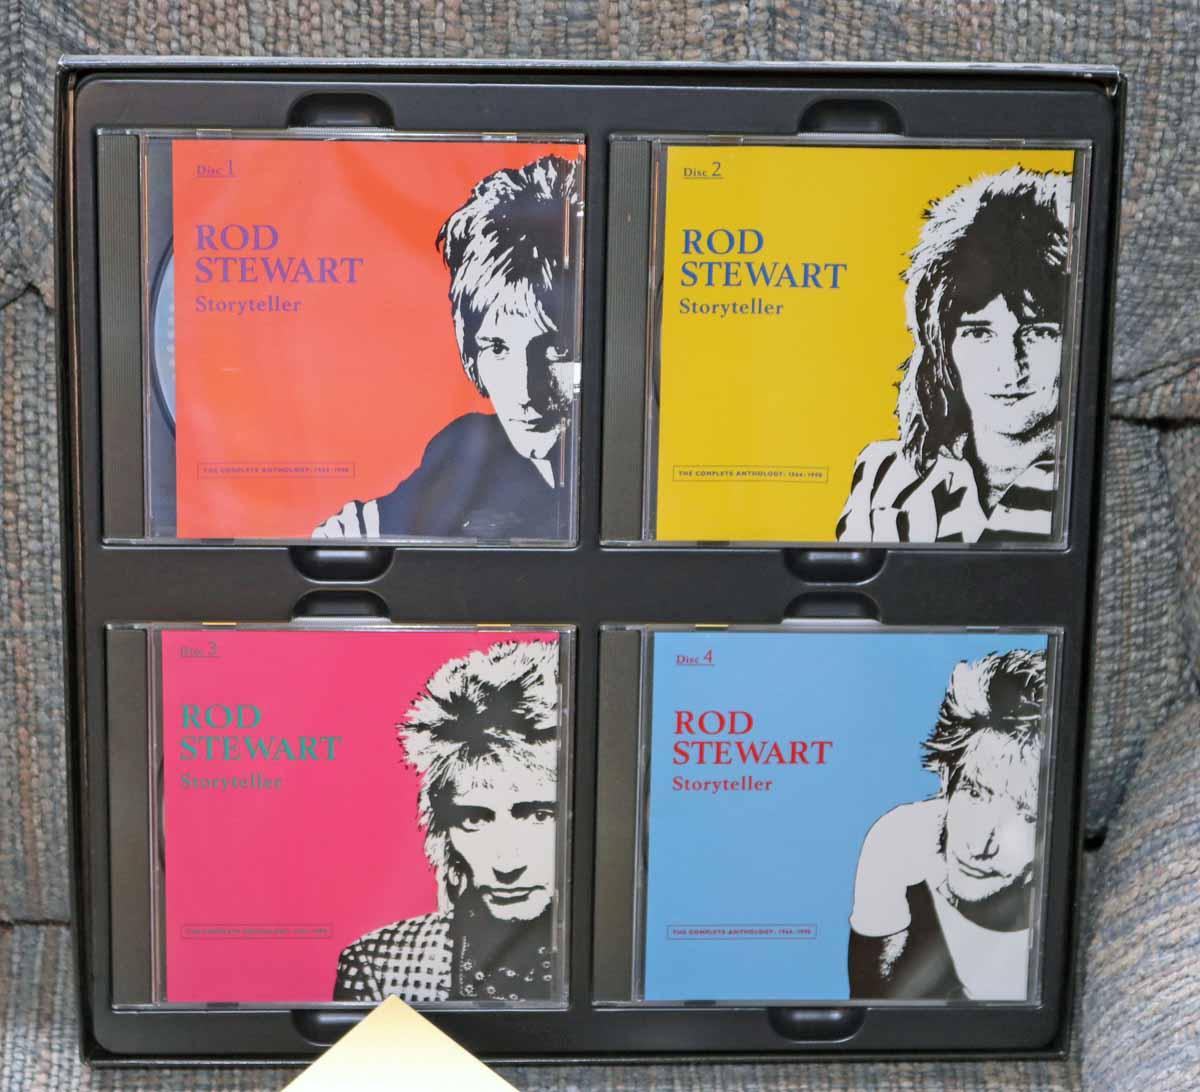 Rod Stewart Anthology "Storyteller" Boxed CD Set